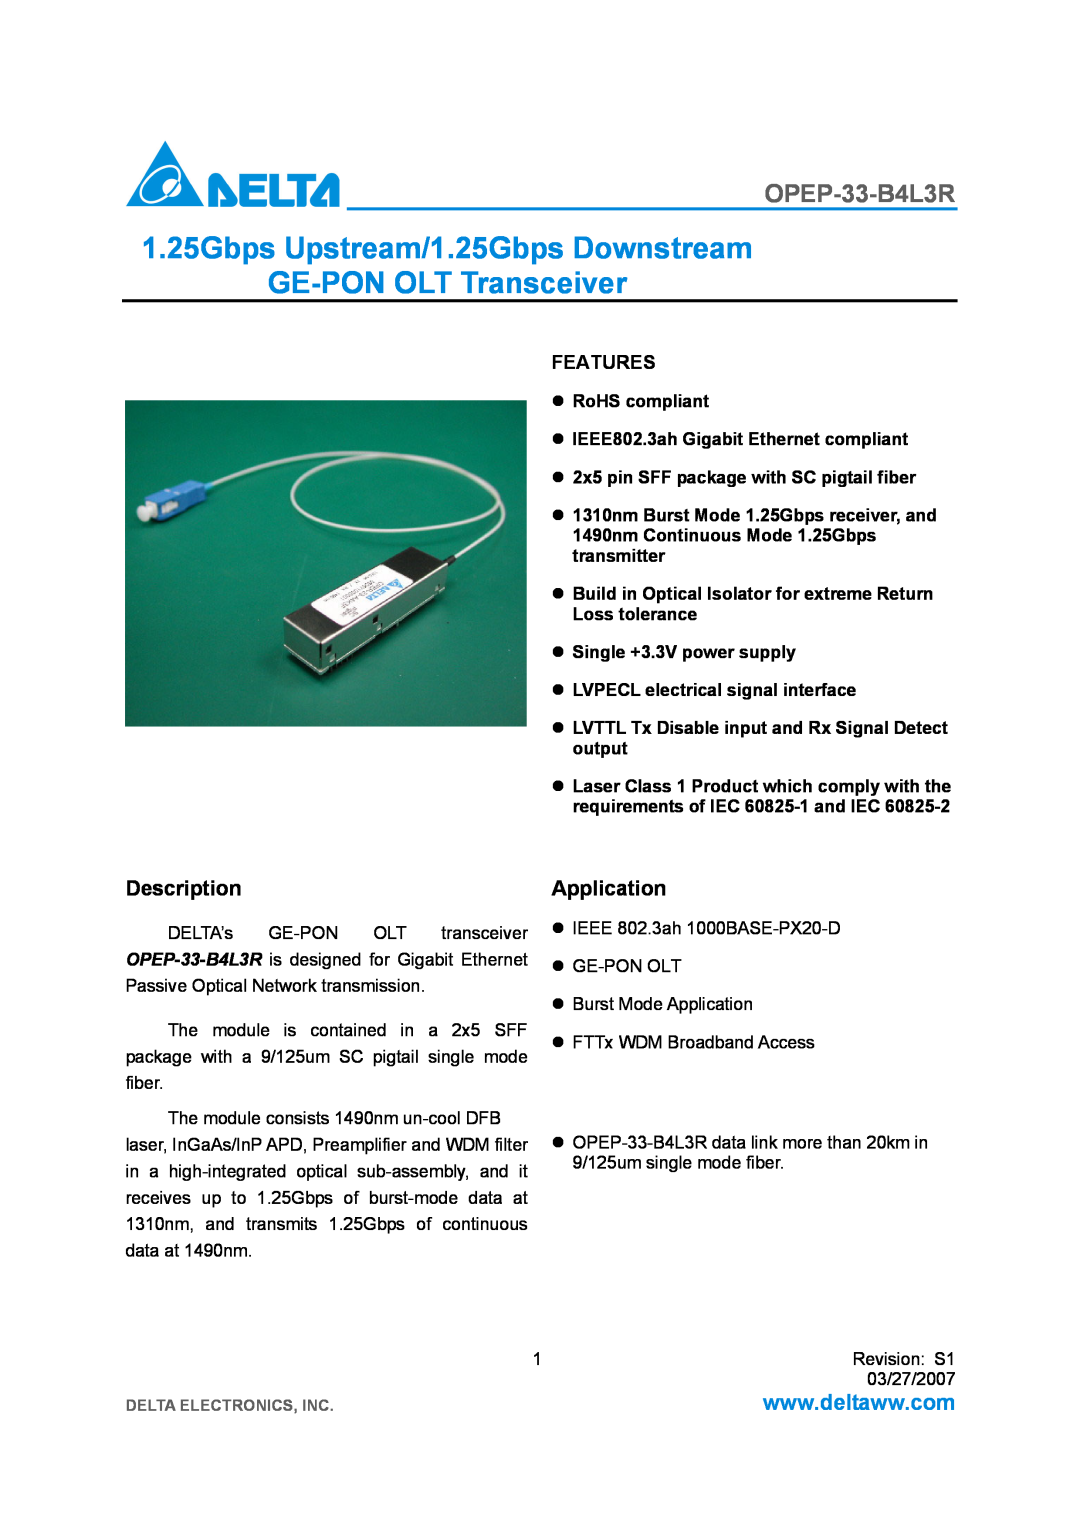 Delta Electronics OPEP-33-B4L3R manual Description, Application, Features 